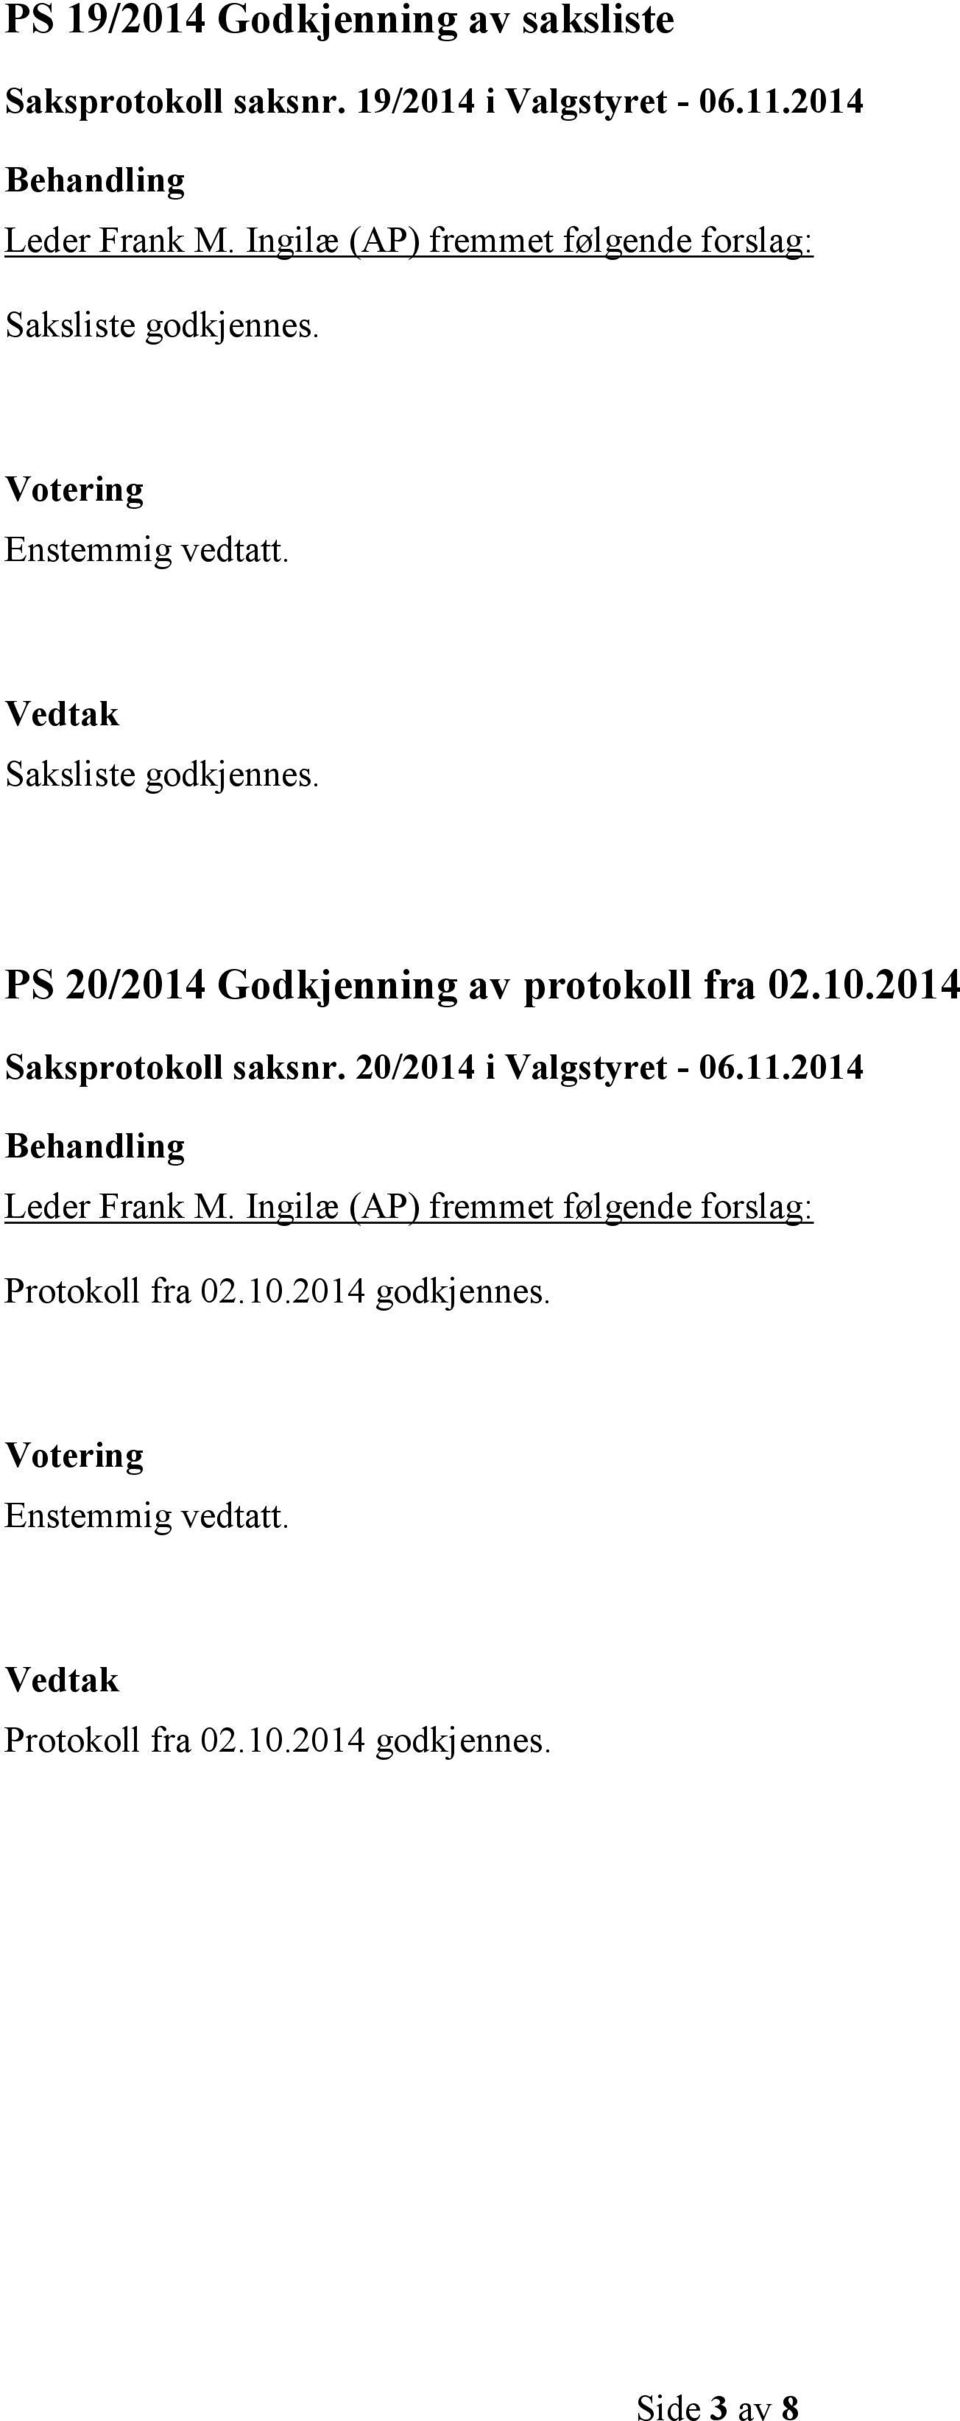 10.2014 Saksprotokoll saksnr. 20/2014 i Valgstyret - 06.11.2014 Leder Frank M.